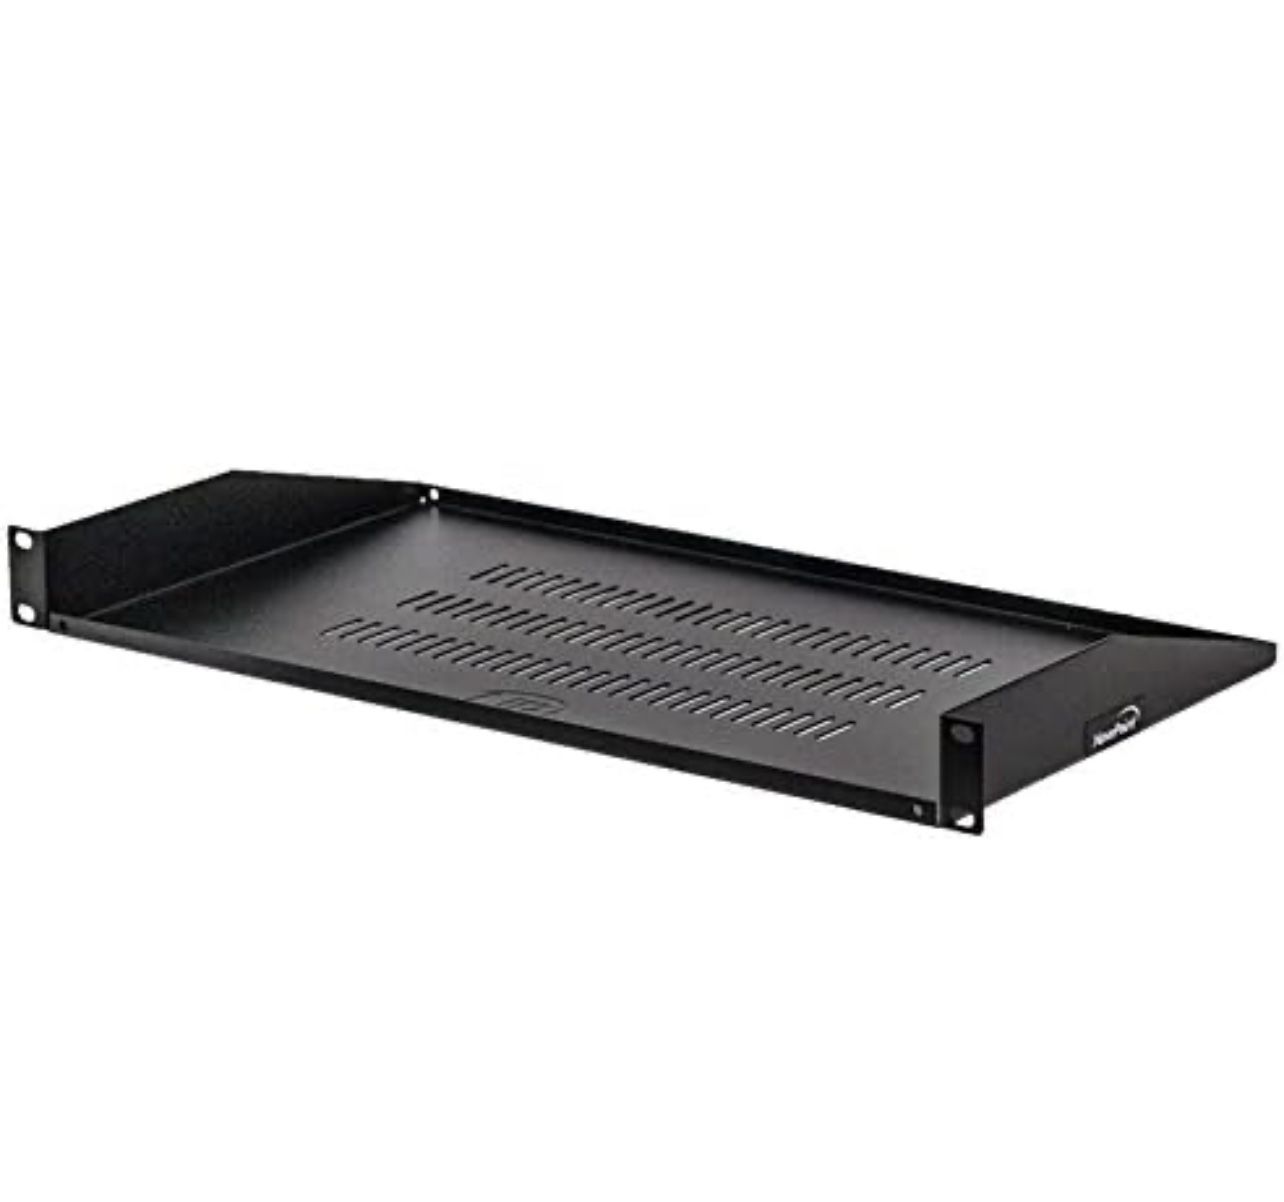 NavePoint Cantilever Server Shelf Vented Shelves Rack Mount 19 Inch 1U Black 10 Inches (250mm) deep